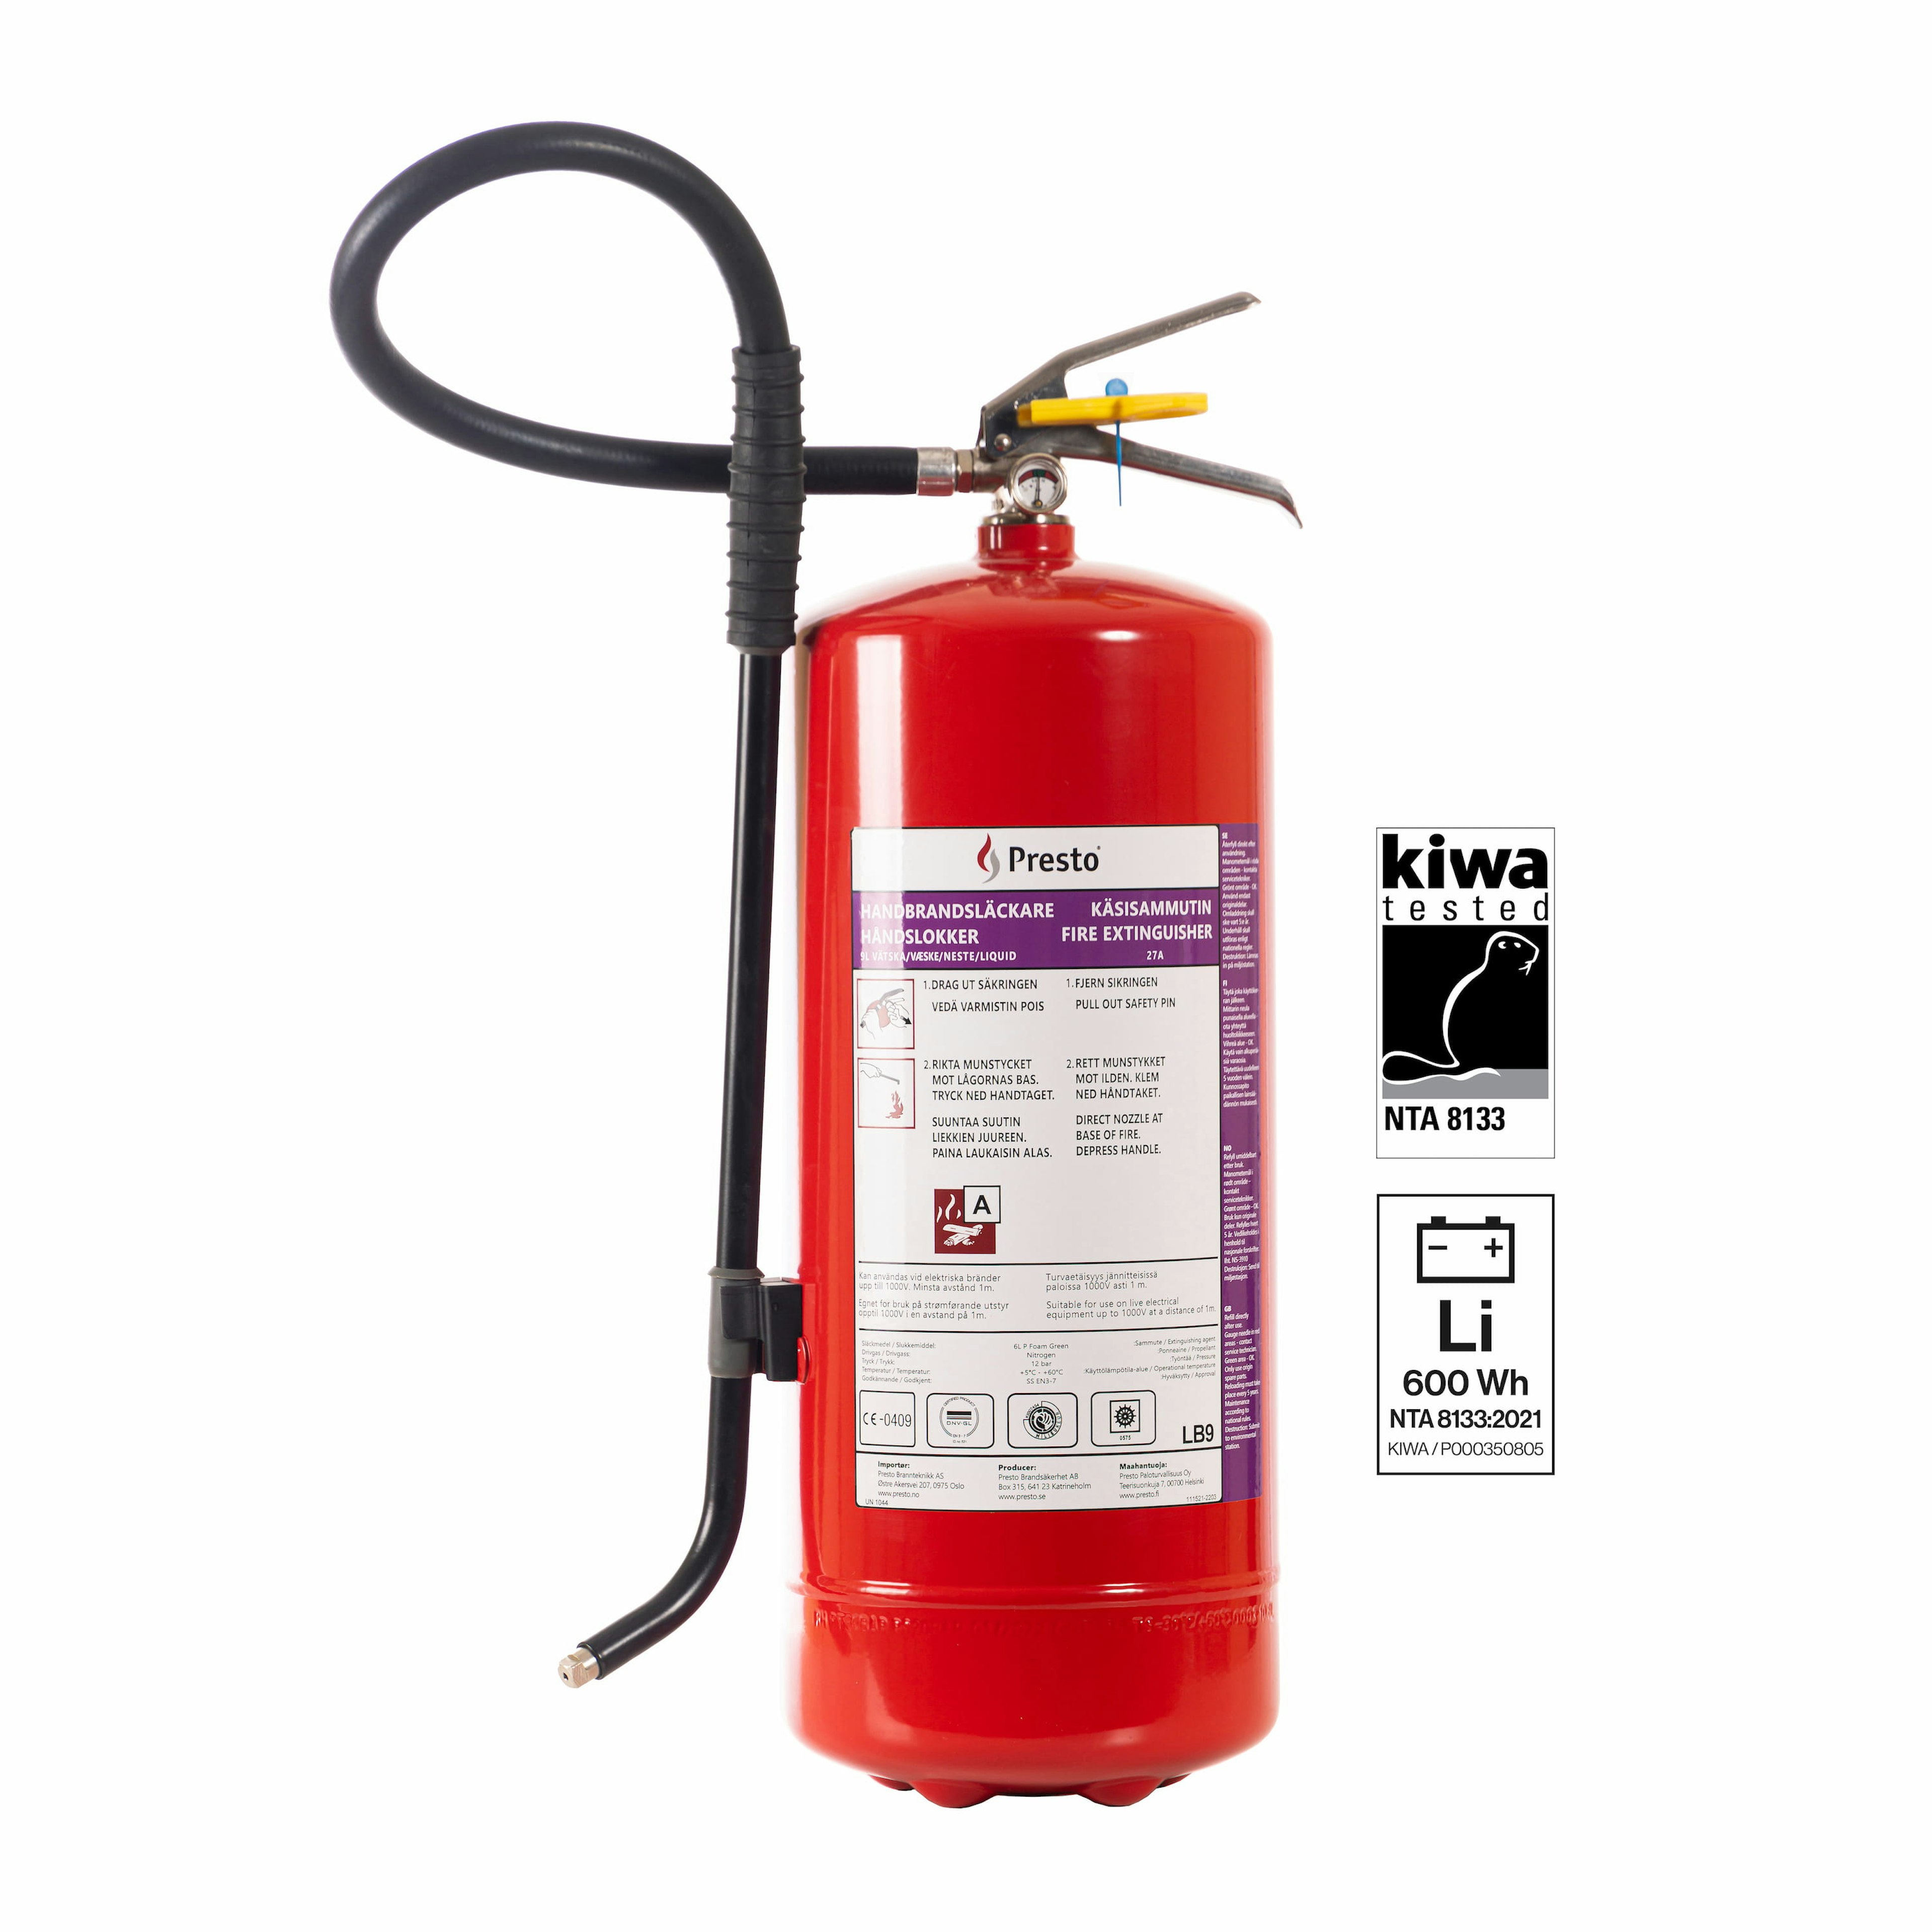 LB9 fire extinguisher